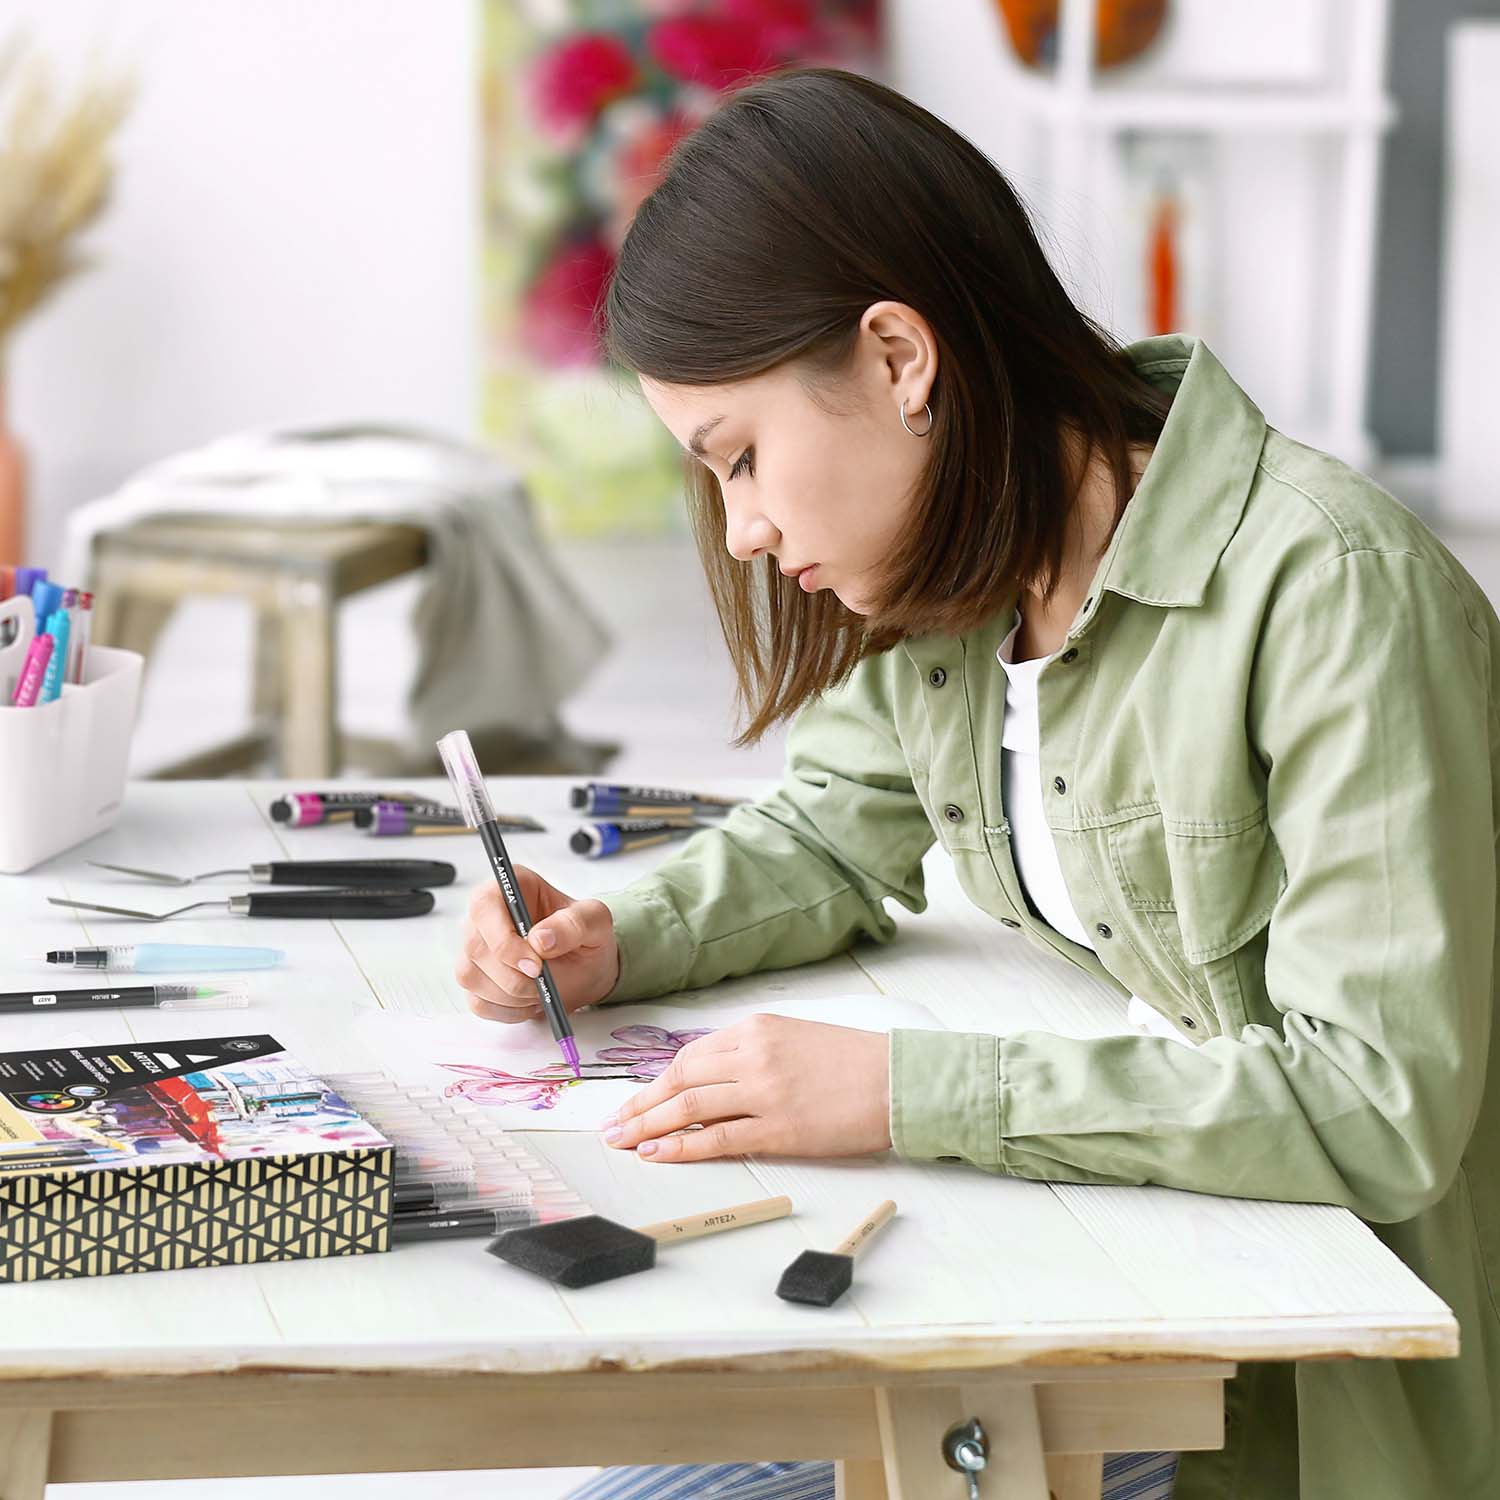 Arteza Brush Pens — The Art Gear Guide